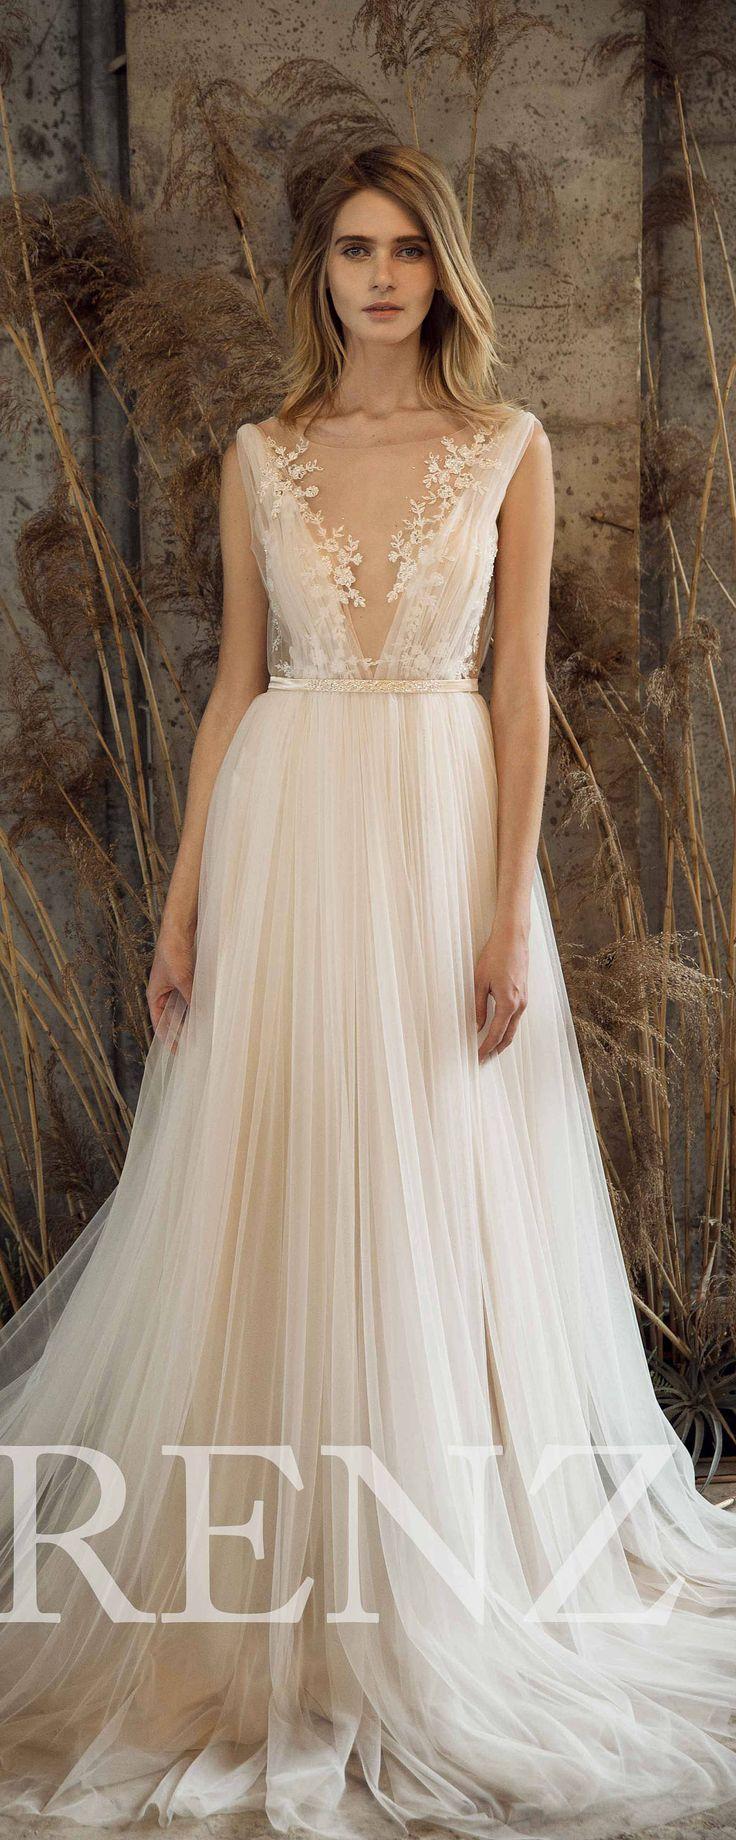 Mariage - Wedding Dress Off White Tulle Dress,V Neck Bridal Dress,Lace Illusion Backless Bride Dress Train Maxi Dress,Sleeveless Evening Dress(LW192)